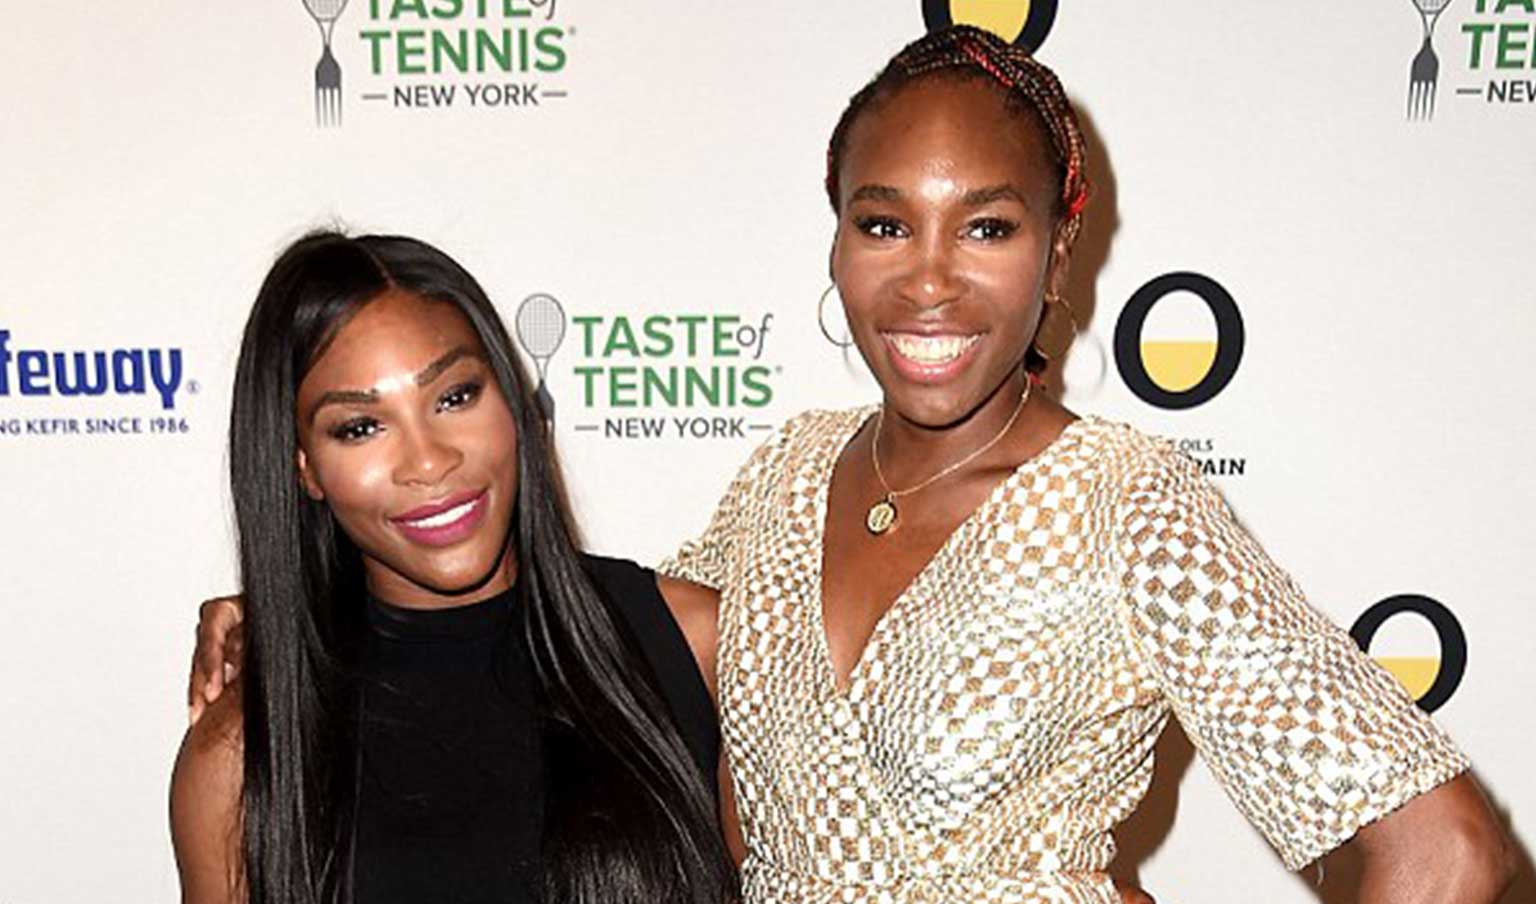 Serena and Venus Williams have beautiful smiles